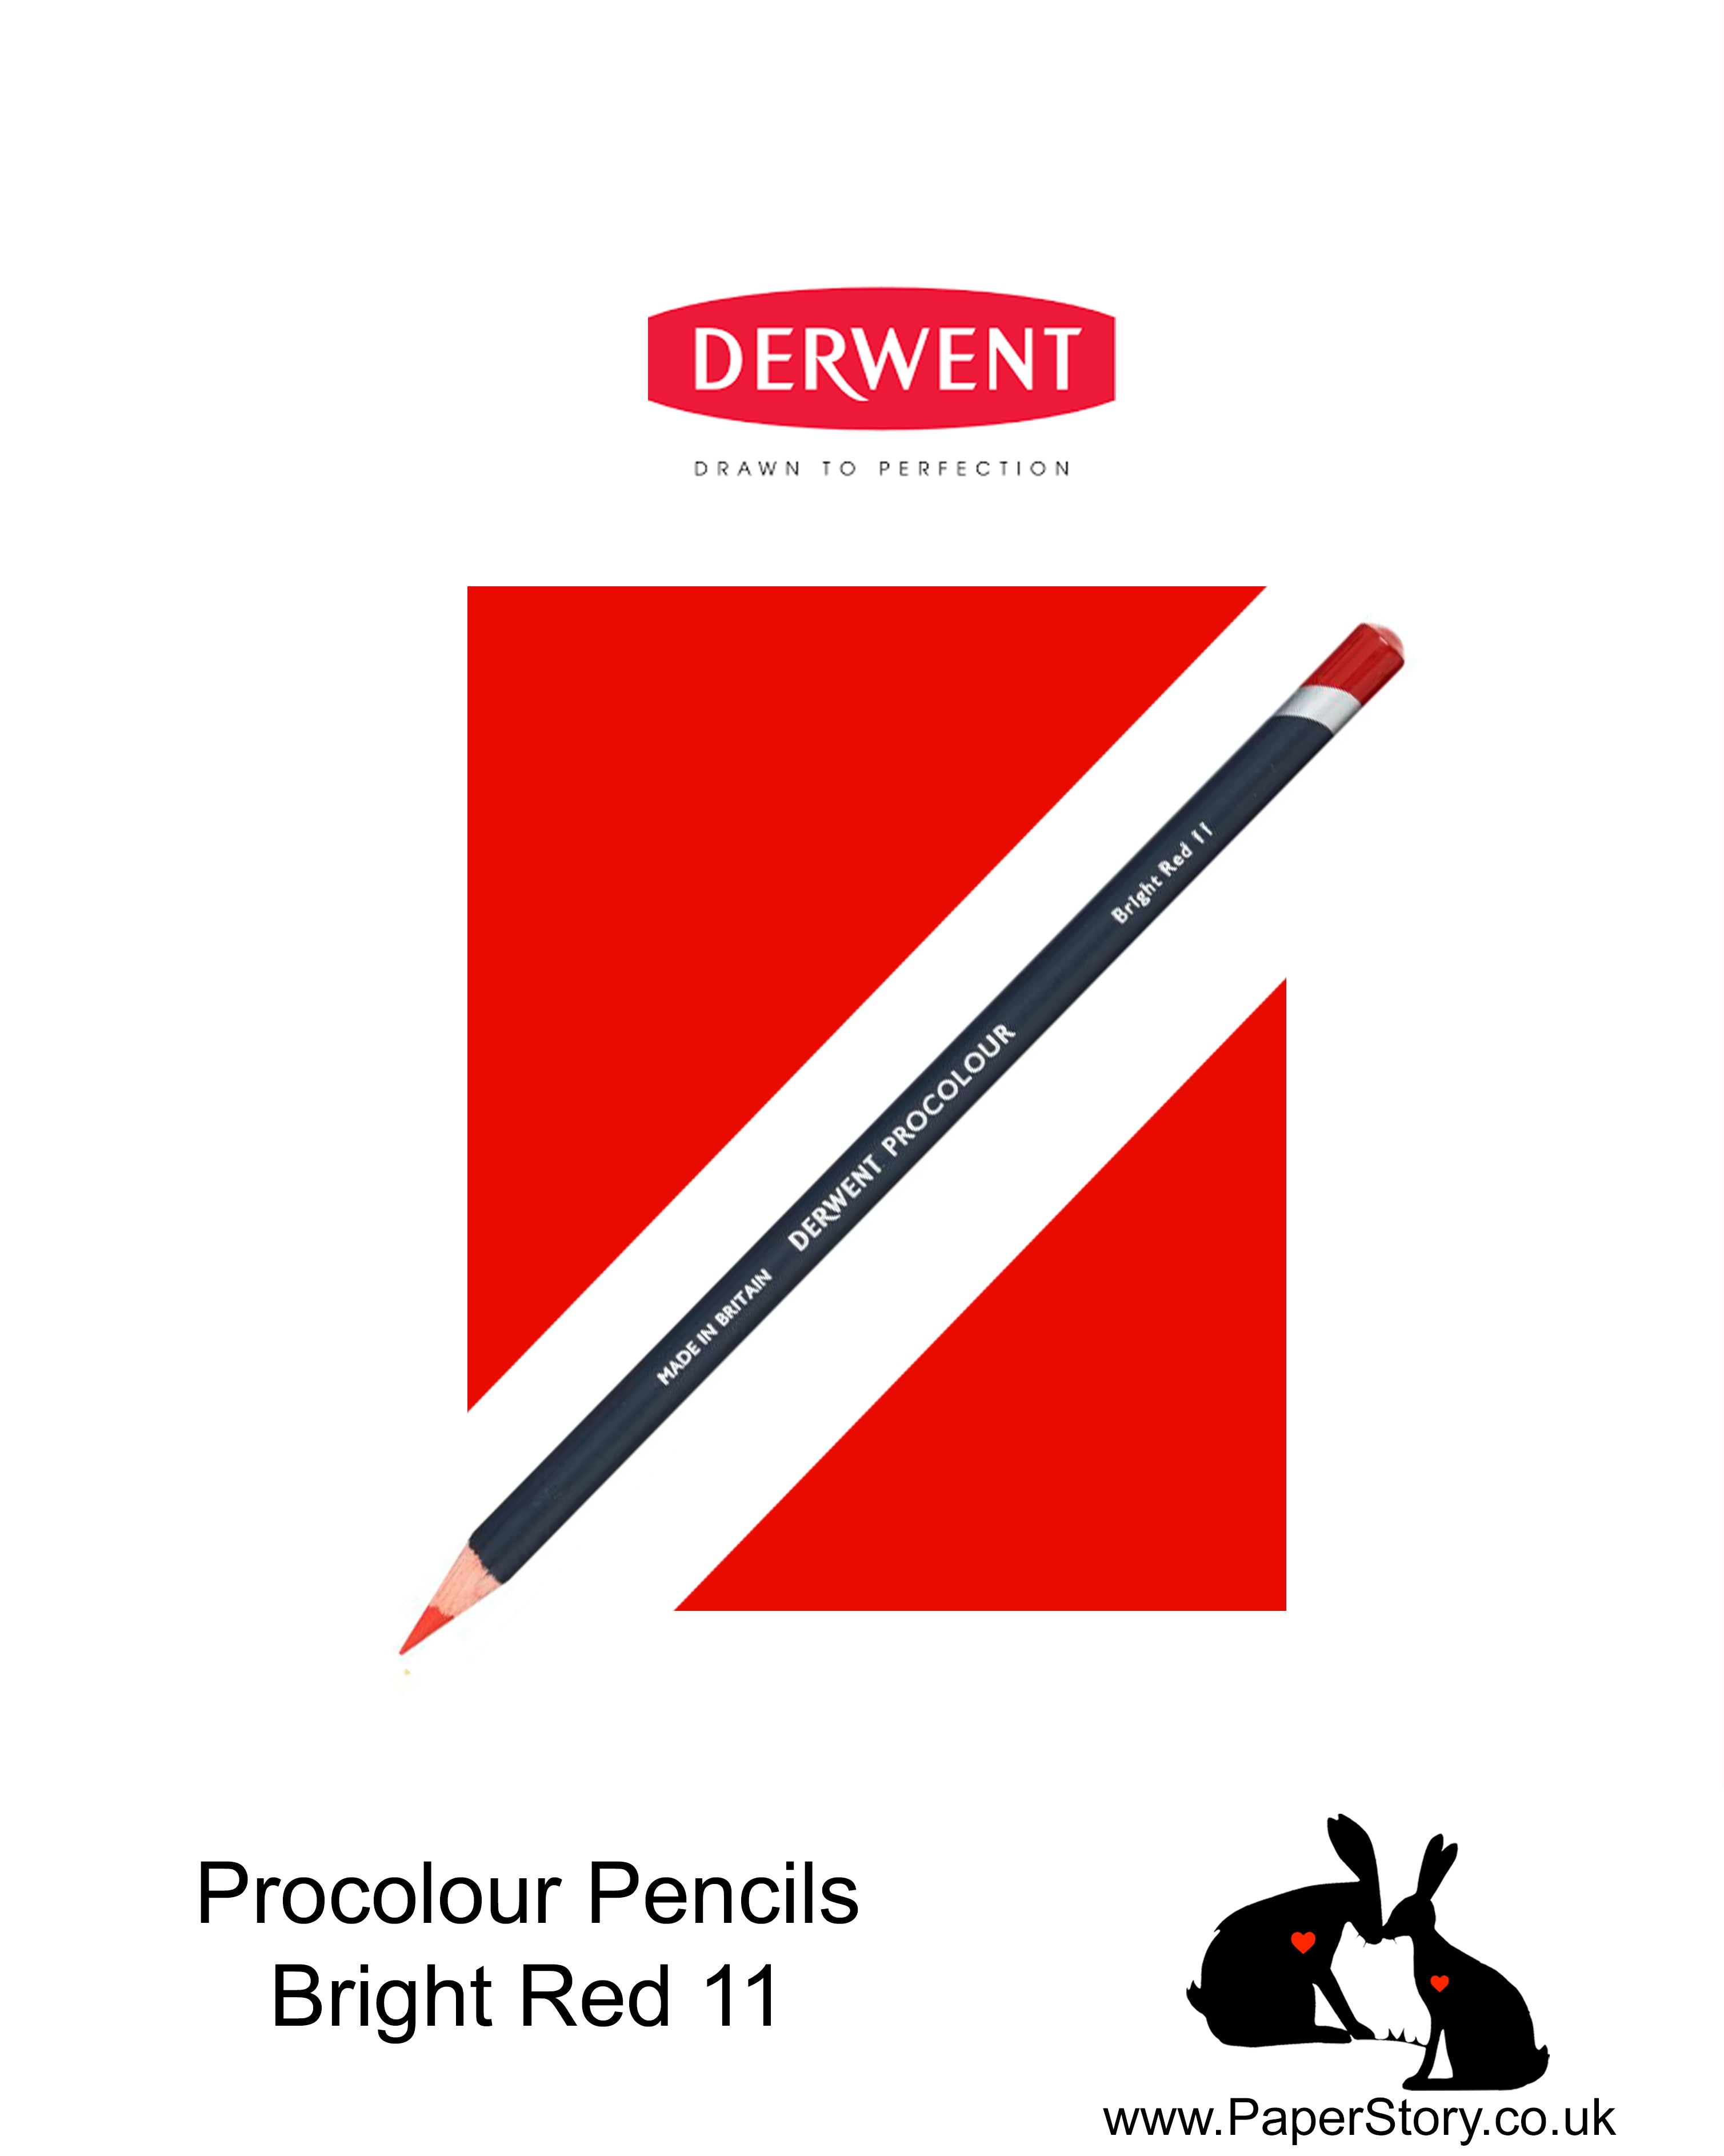 Derwent Procolour pencil Bright Red 11